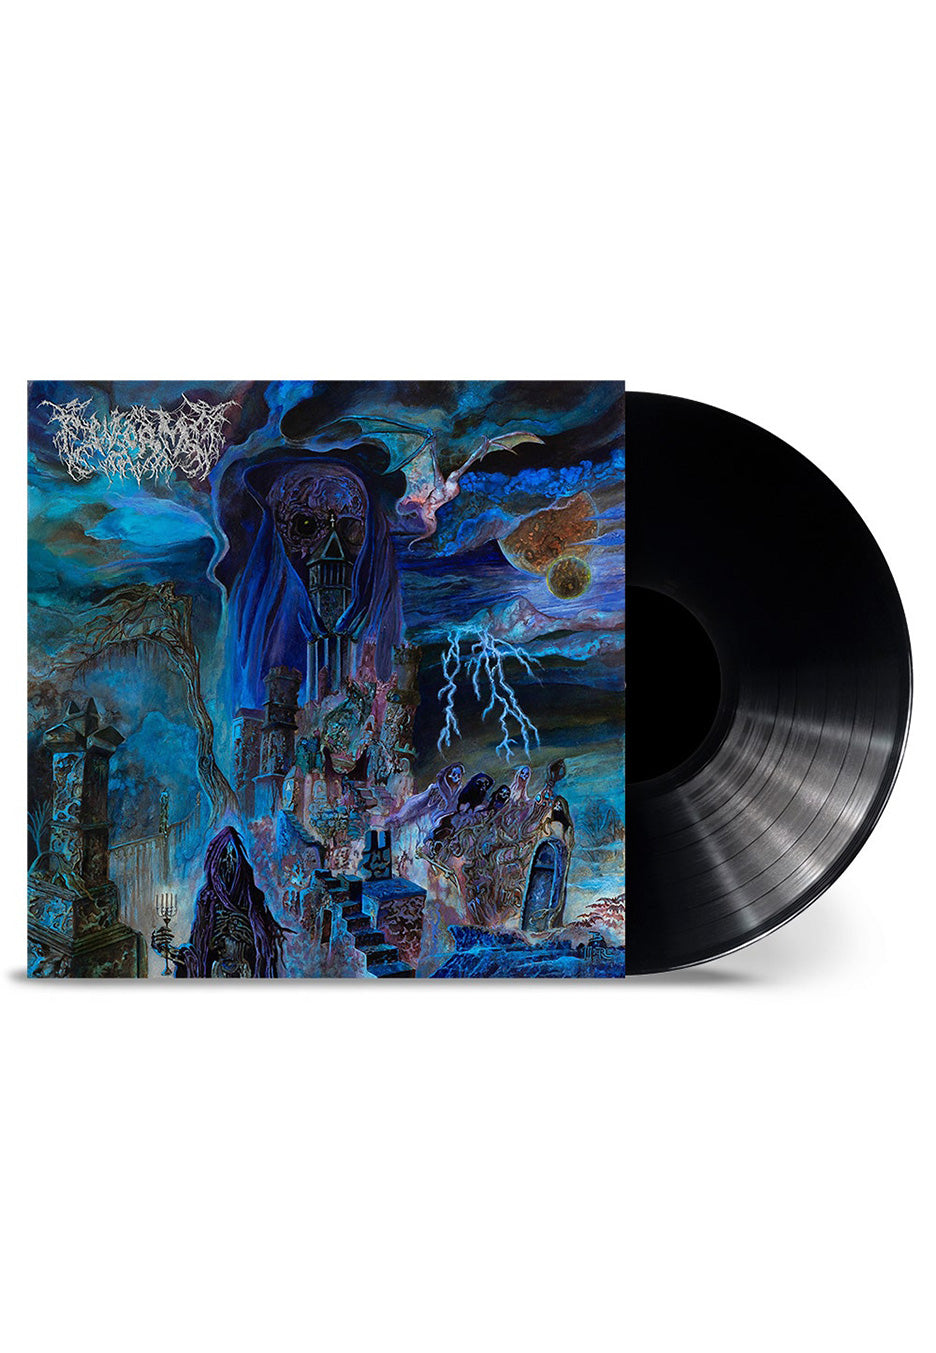 Worm - Bluenothing - Vinyl